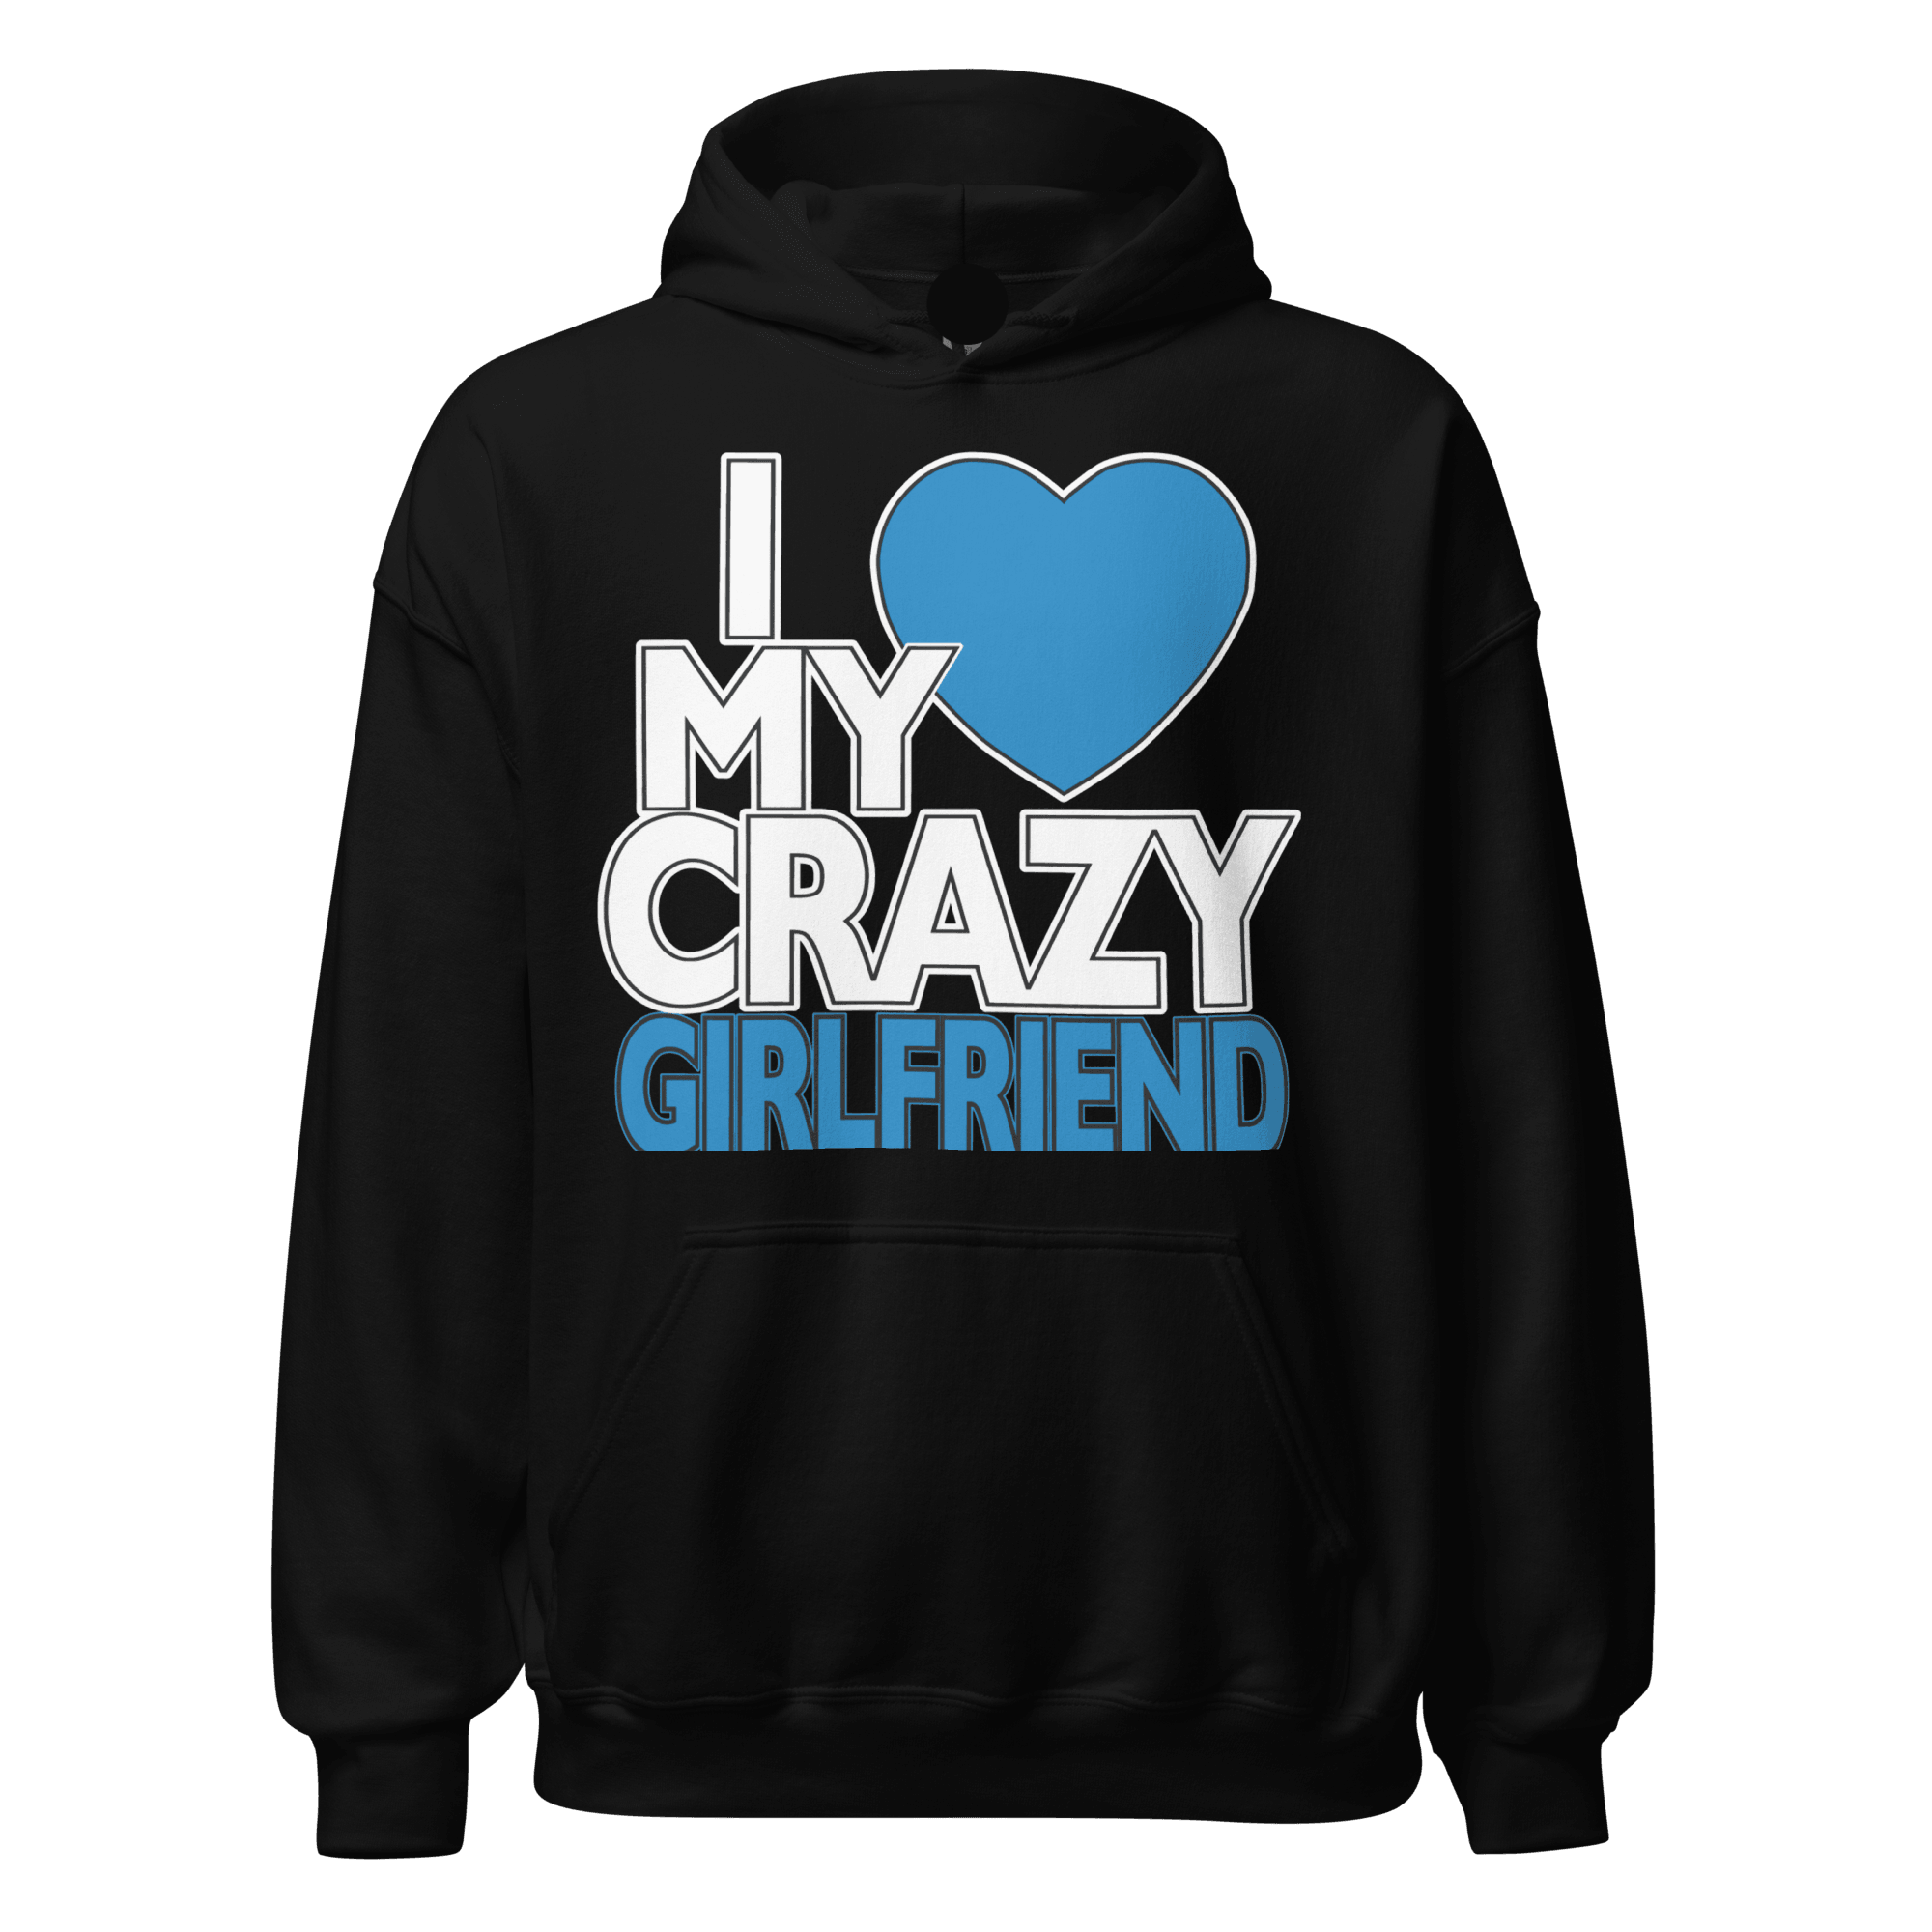 I Love My Crazy Boyfriend/Girlfriend Couples Hoodie Set Ultra Soft Blended Cotton Unisex Pullovers - TopKoalaTee